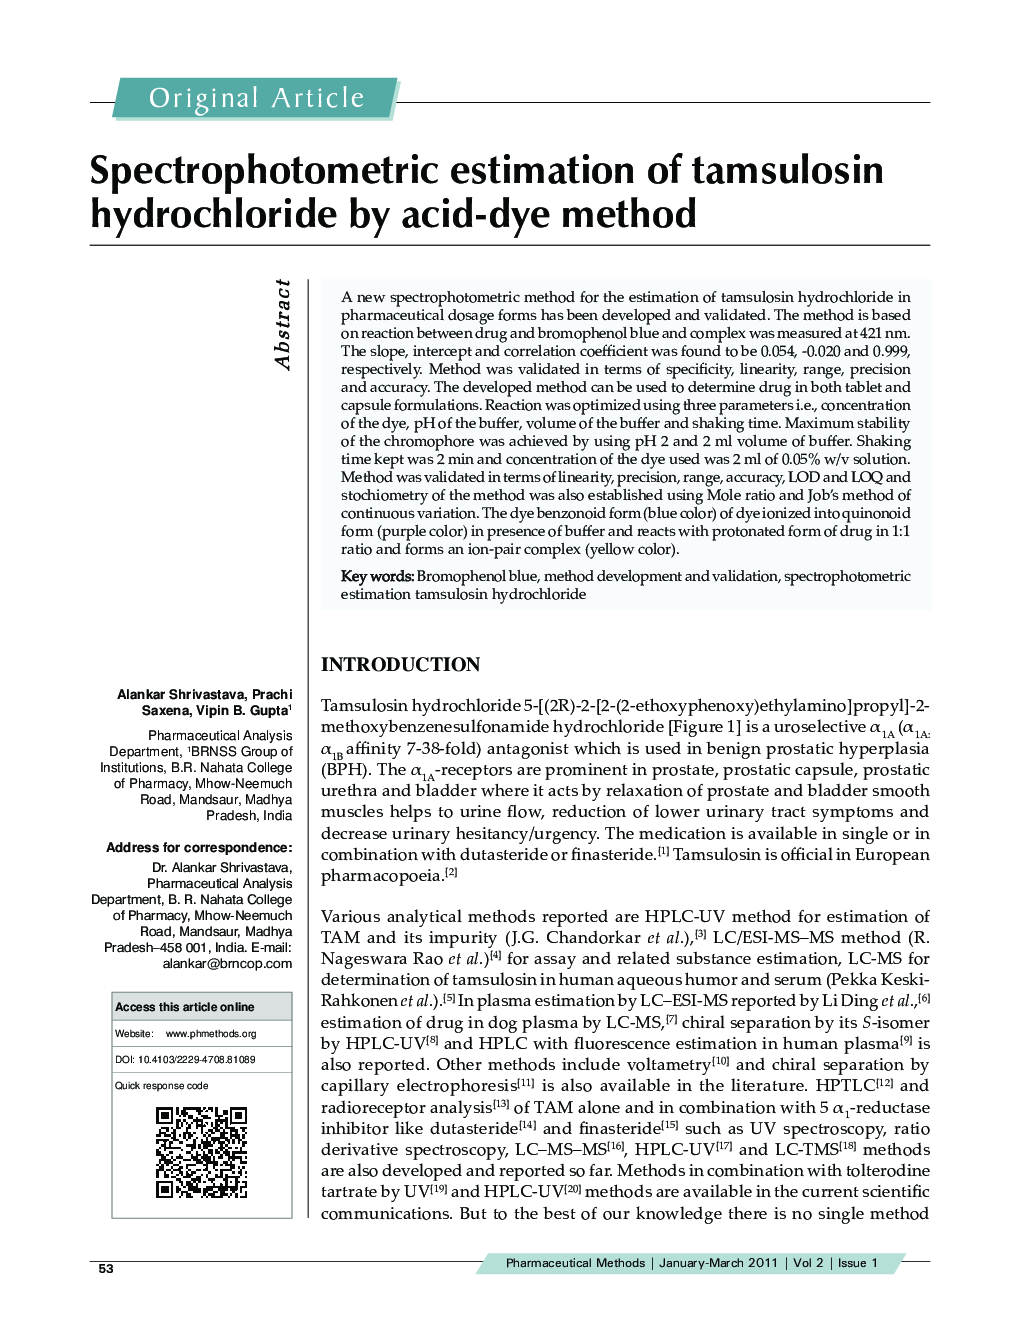 Spectrophotometric estimation of tamsulosin hydrochloride by acid-dye method